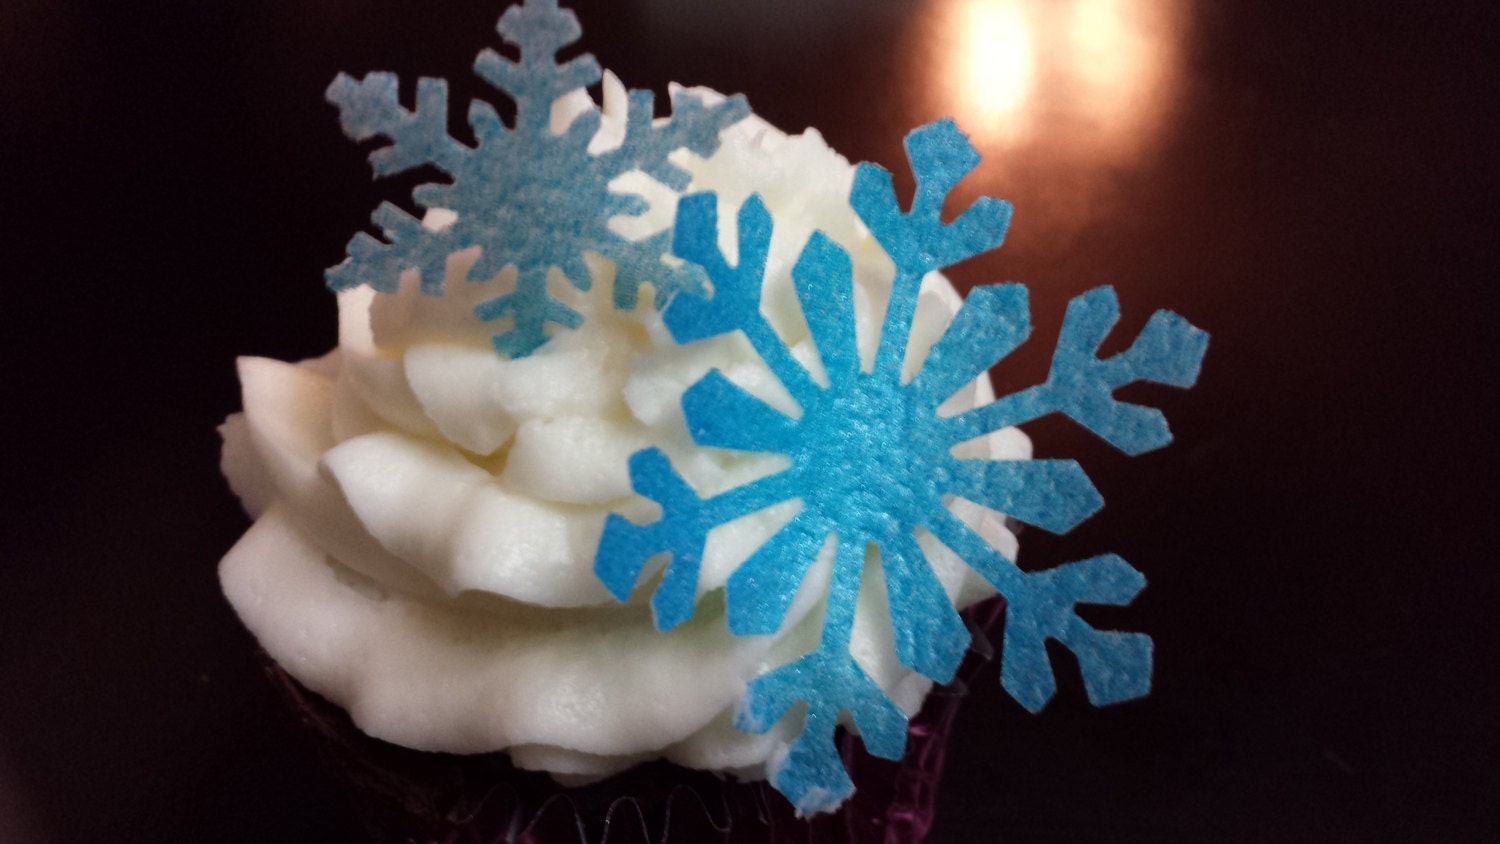 50pcs Edible Snowflake Christmas Cake Decorating Tools Cupcake